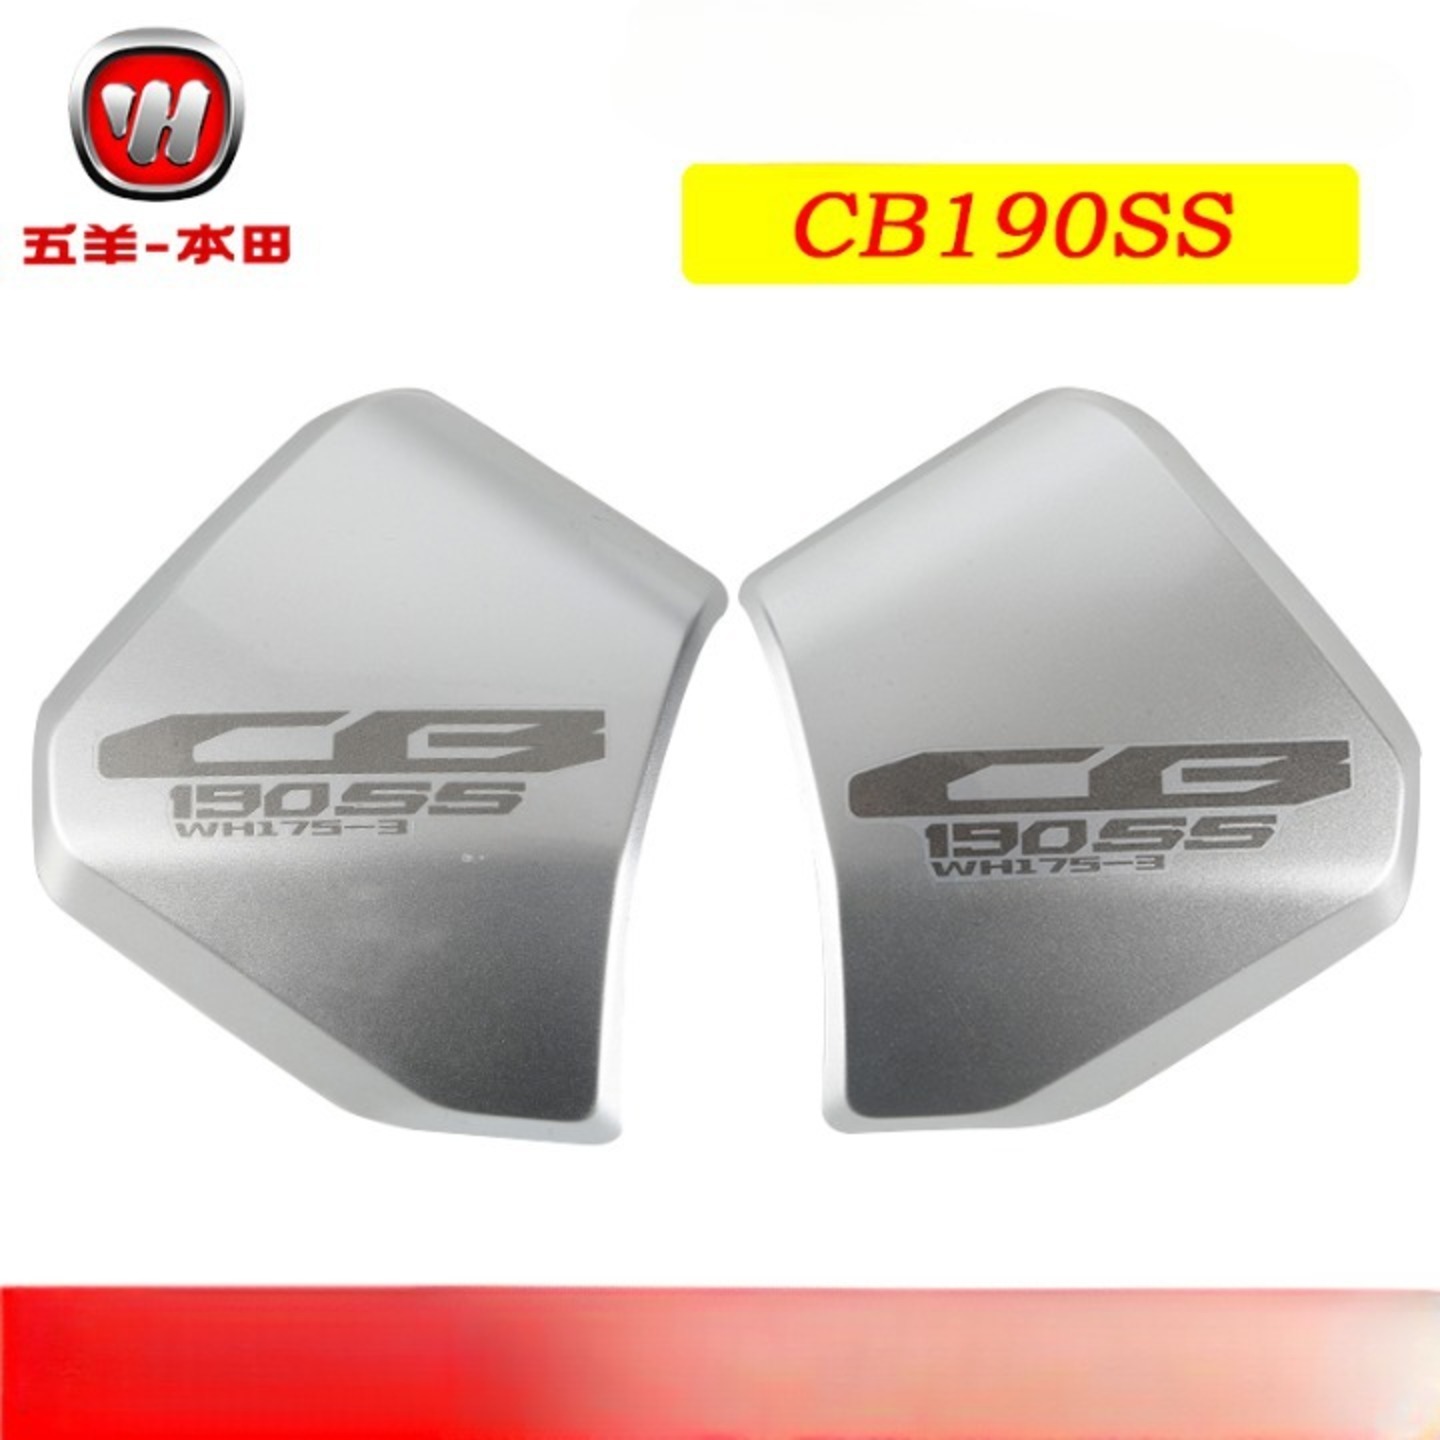 Honda CB190SS side panels fairing fairings covers coverset